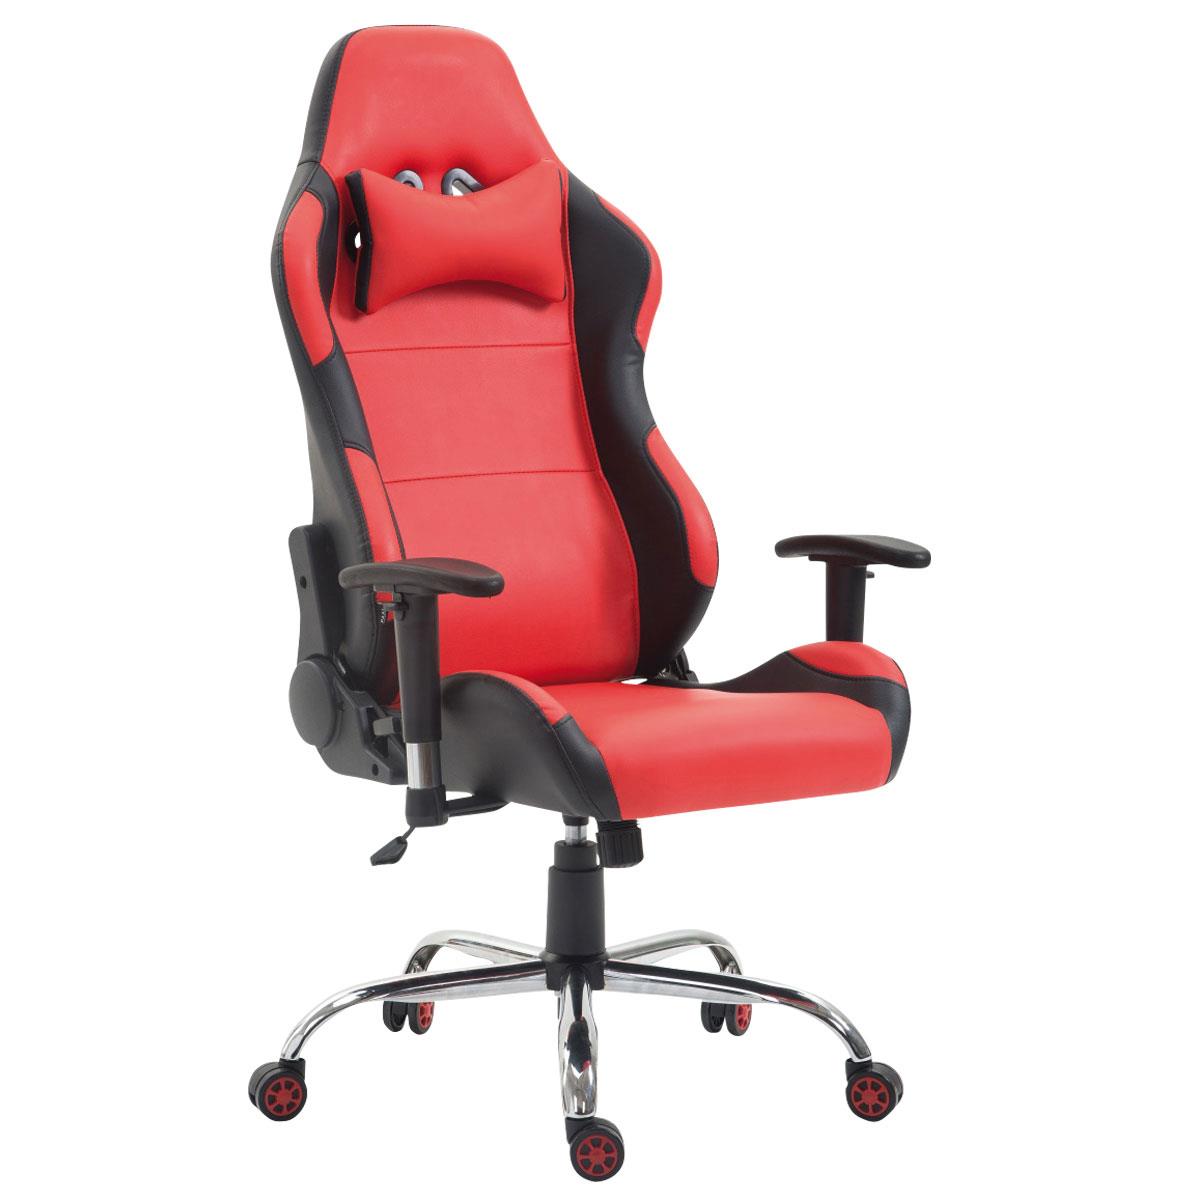 Gaming-Stuhl ROSBY.Sportliches Design und hoher Komfort, Lederbezug, Farbe Rot